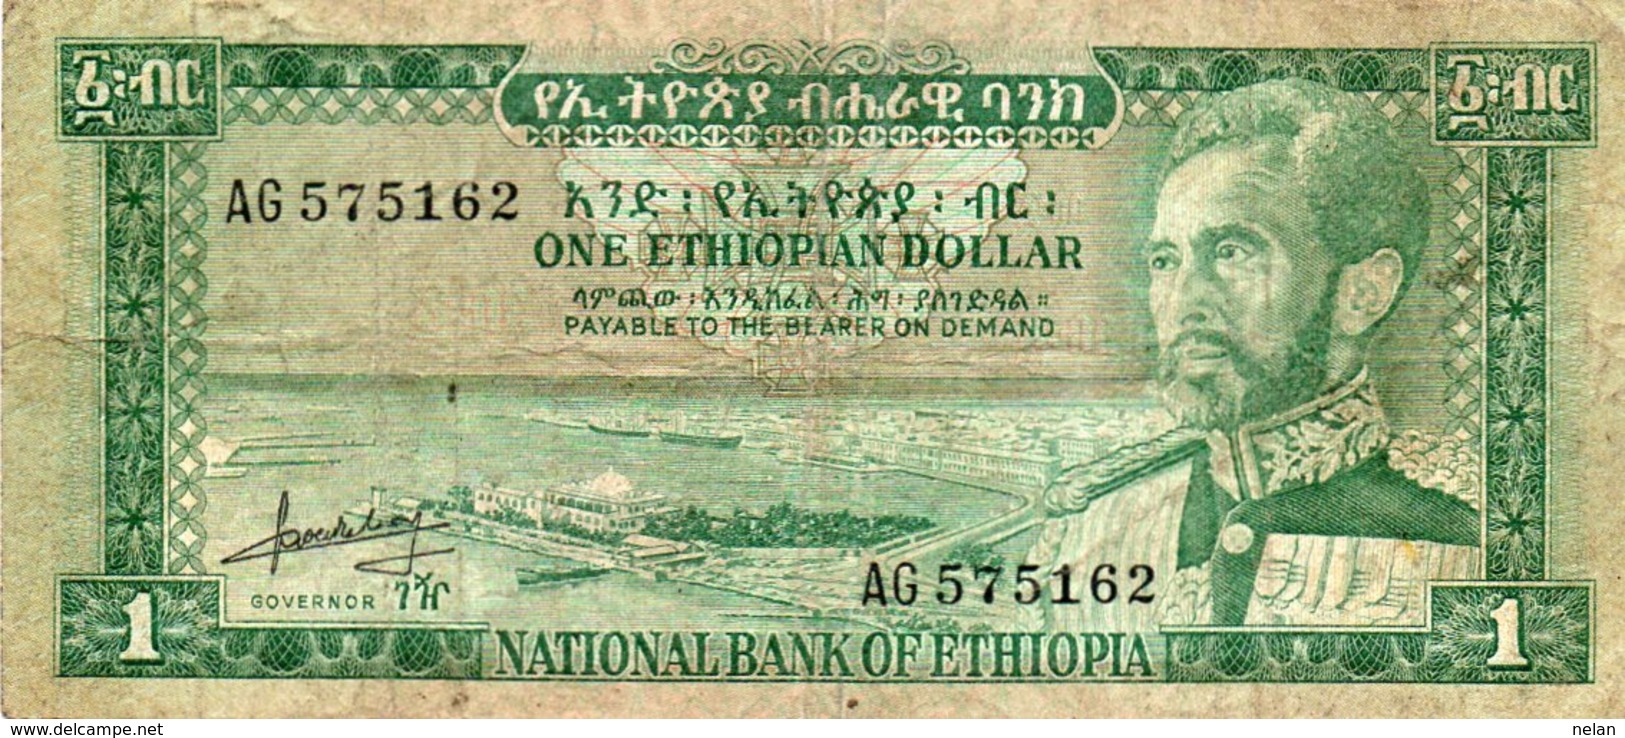 ETHIOPIA 1 DOLLAR 1966 P-25 - Etiopía